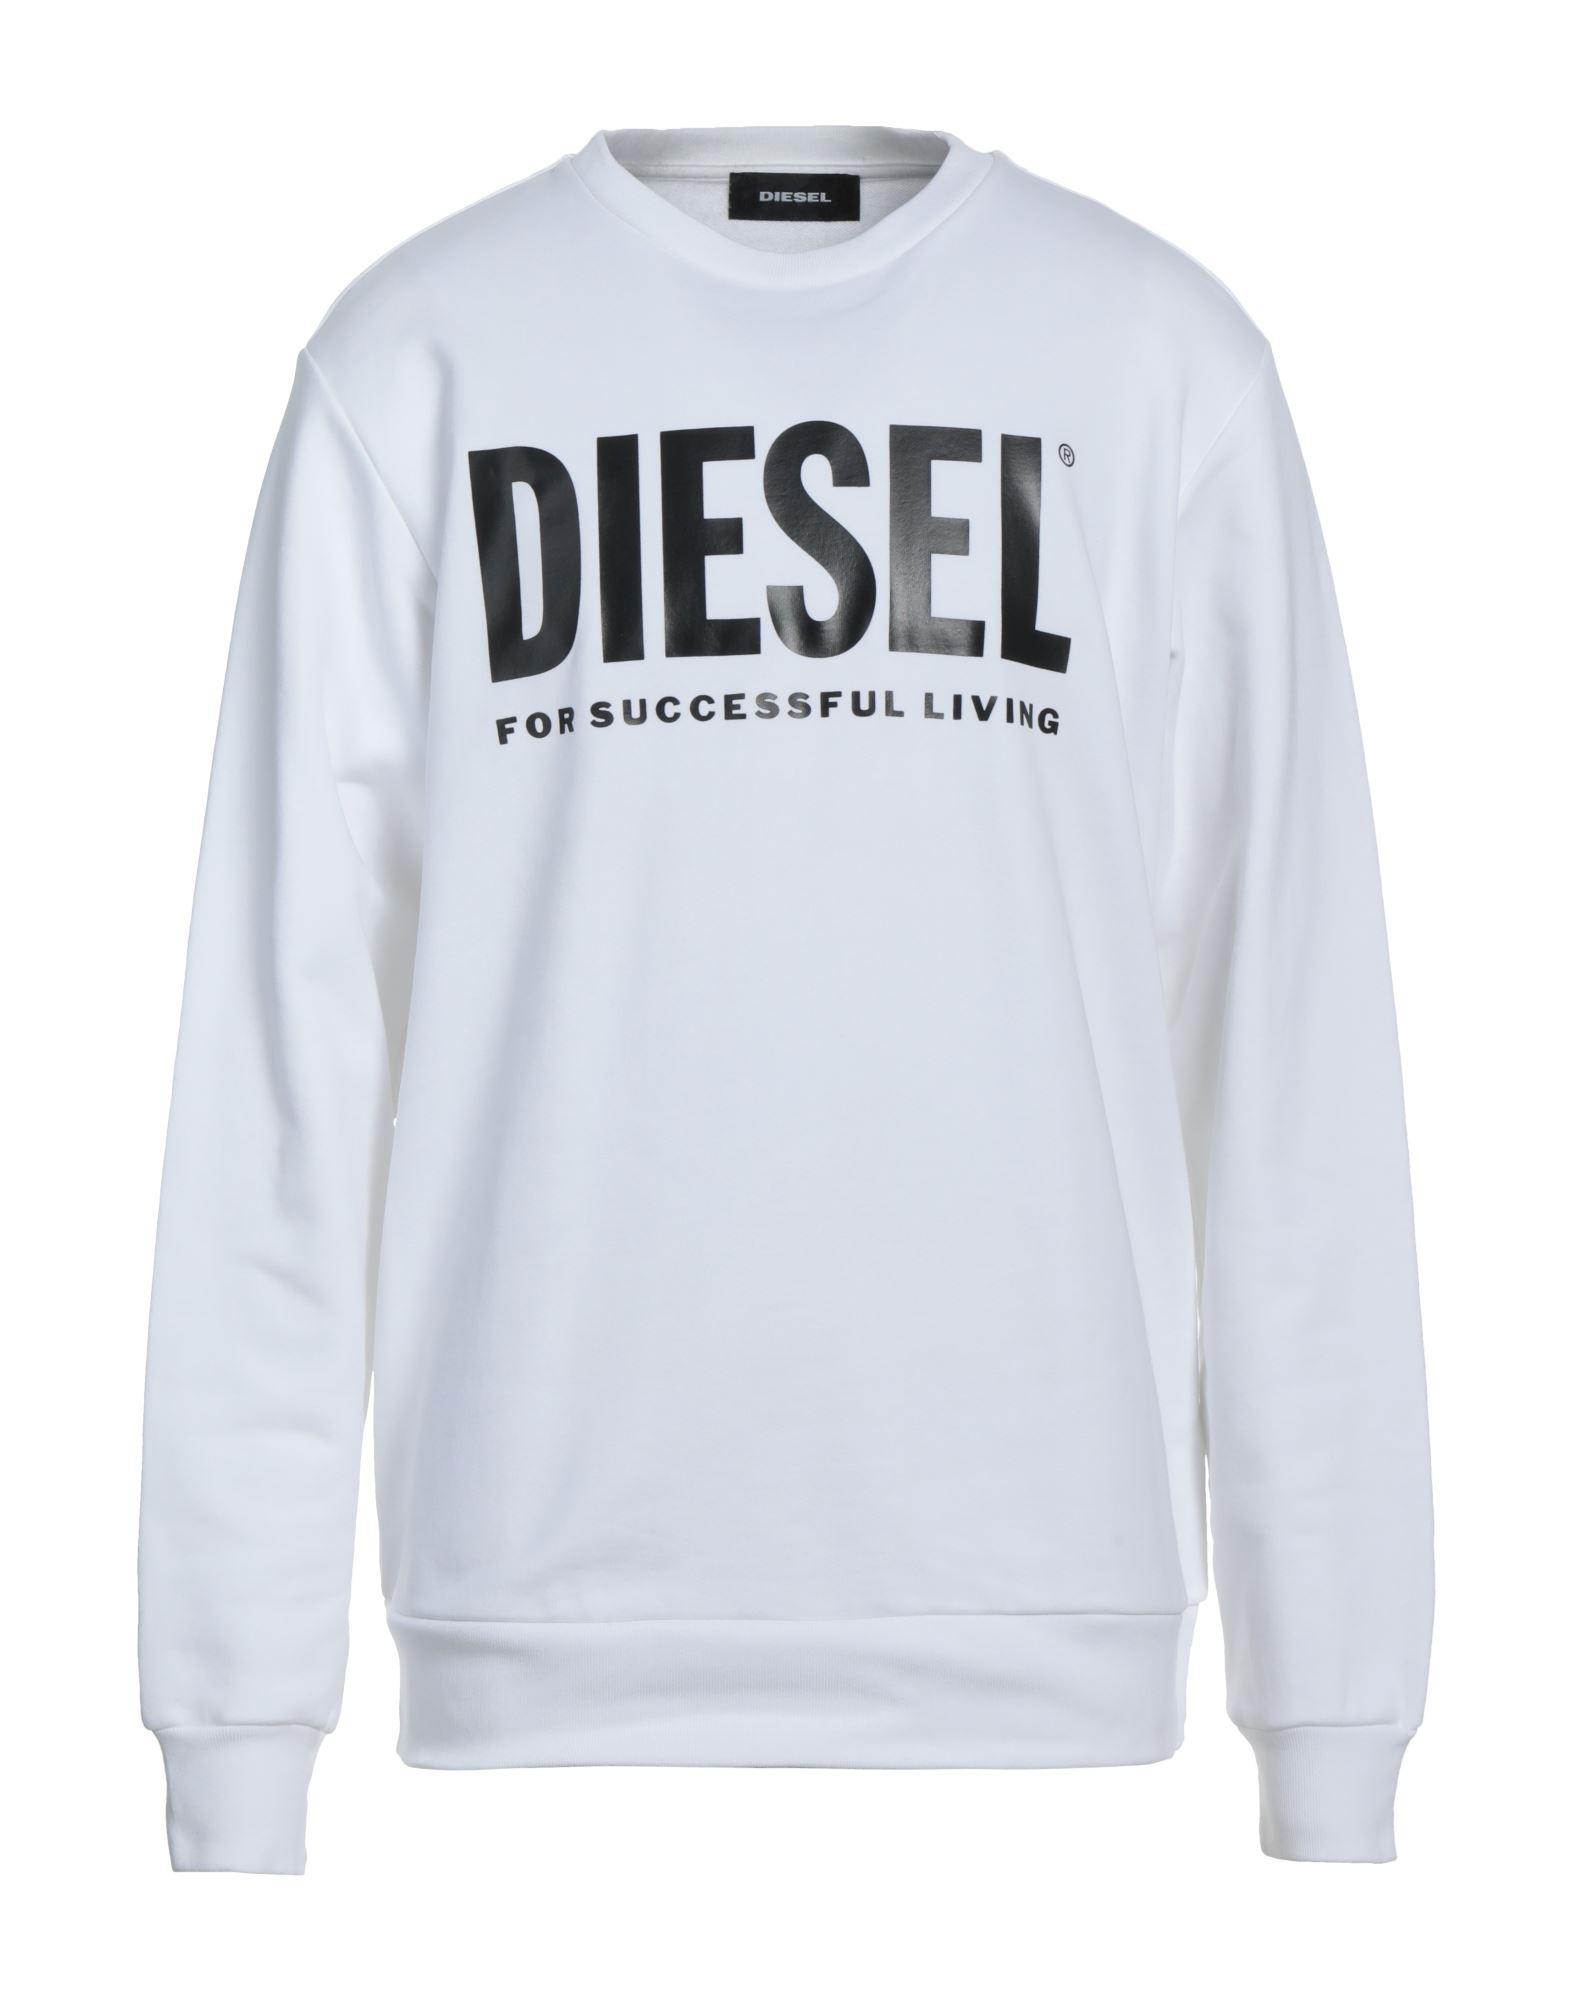 DIESEL Sweatshirt in White for Men | Lyst